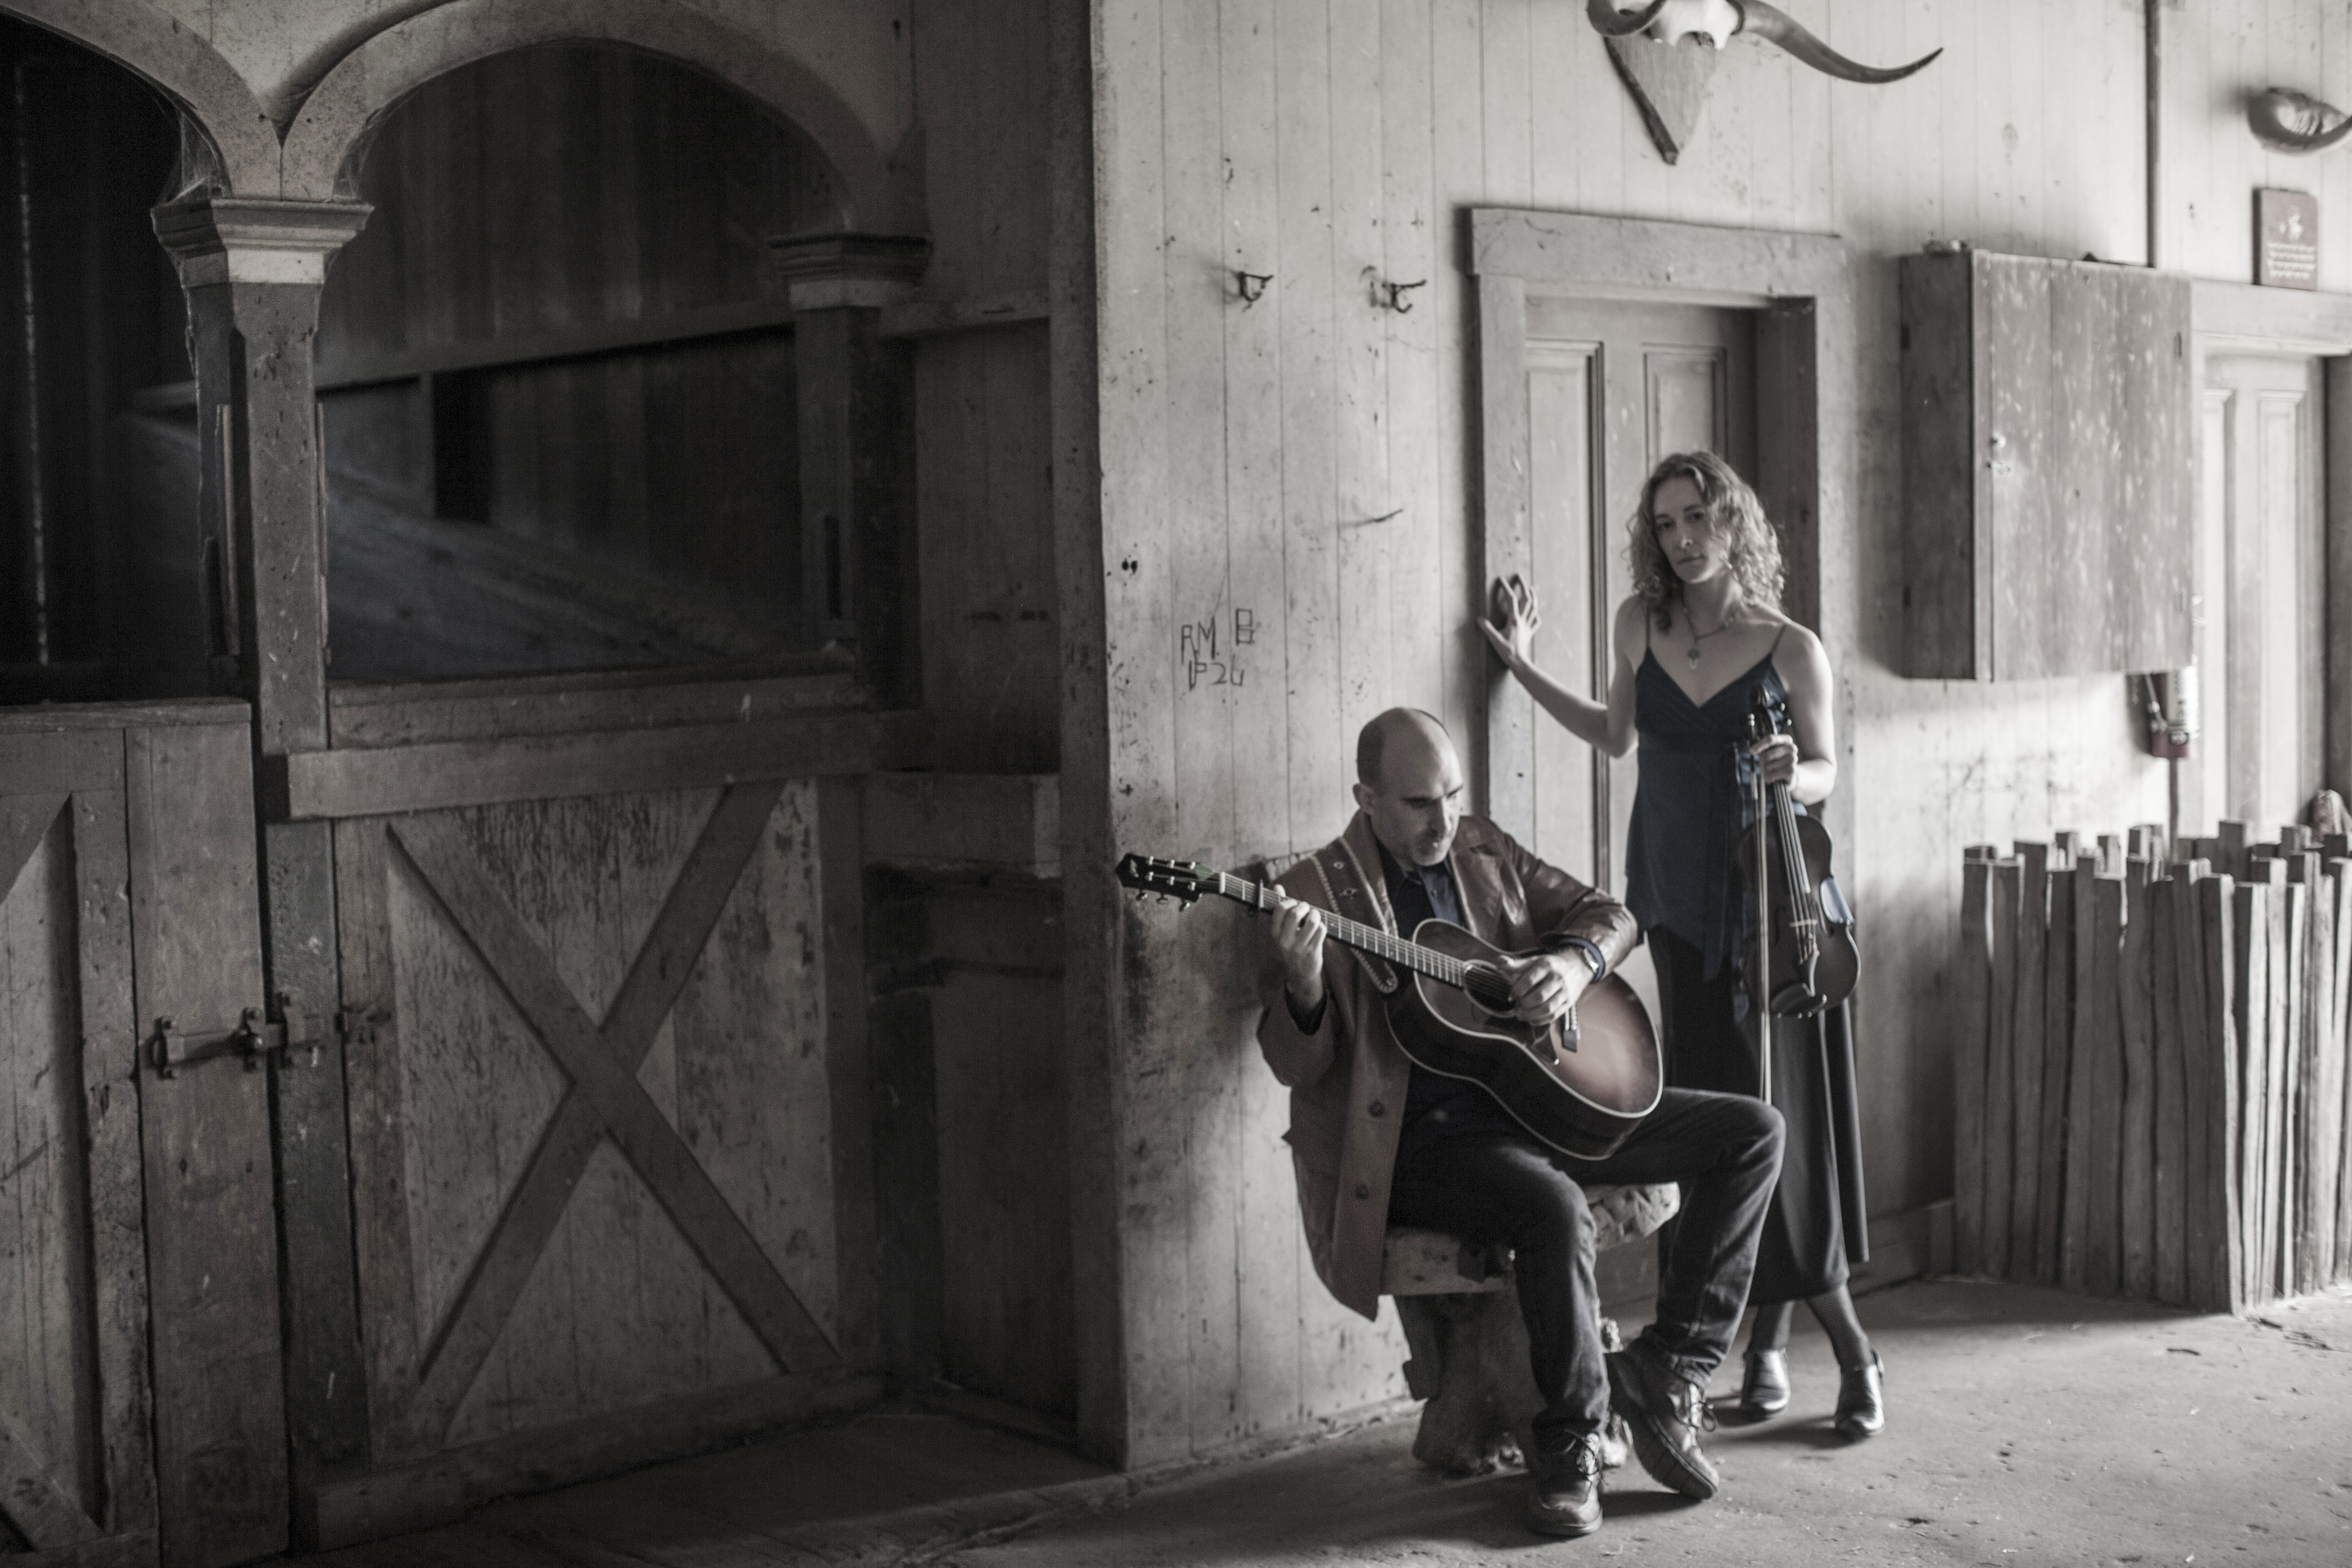 Dan Frechette & Laurel Thomsen posing with their instruments in a barn